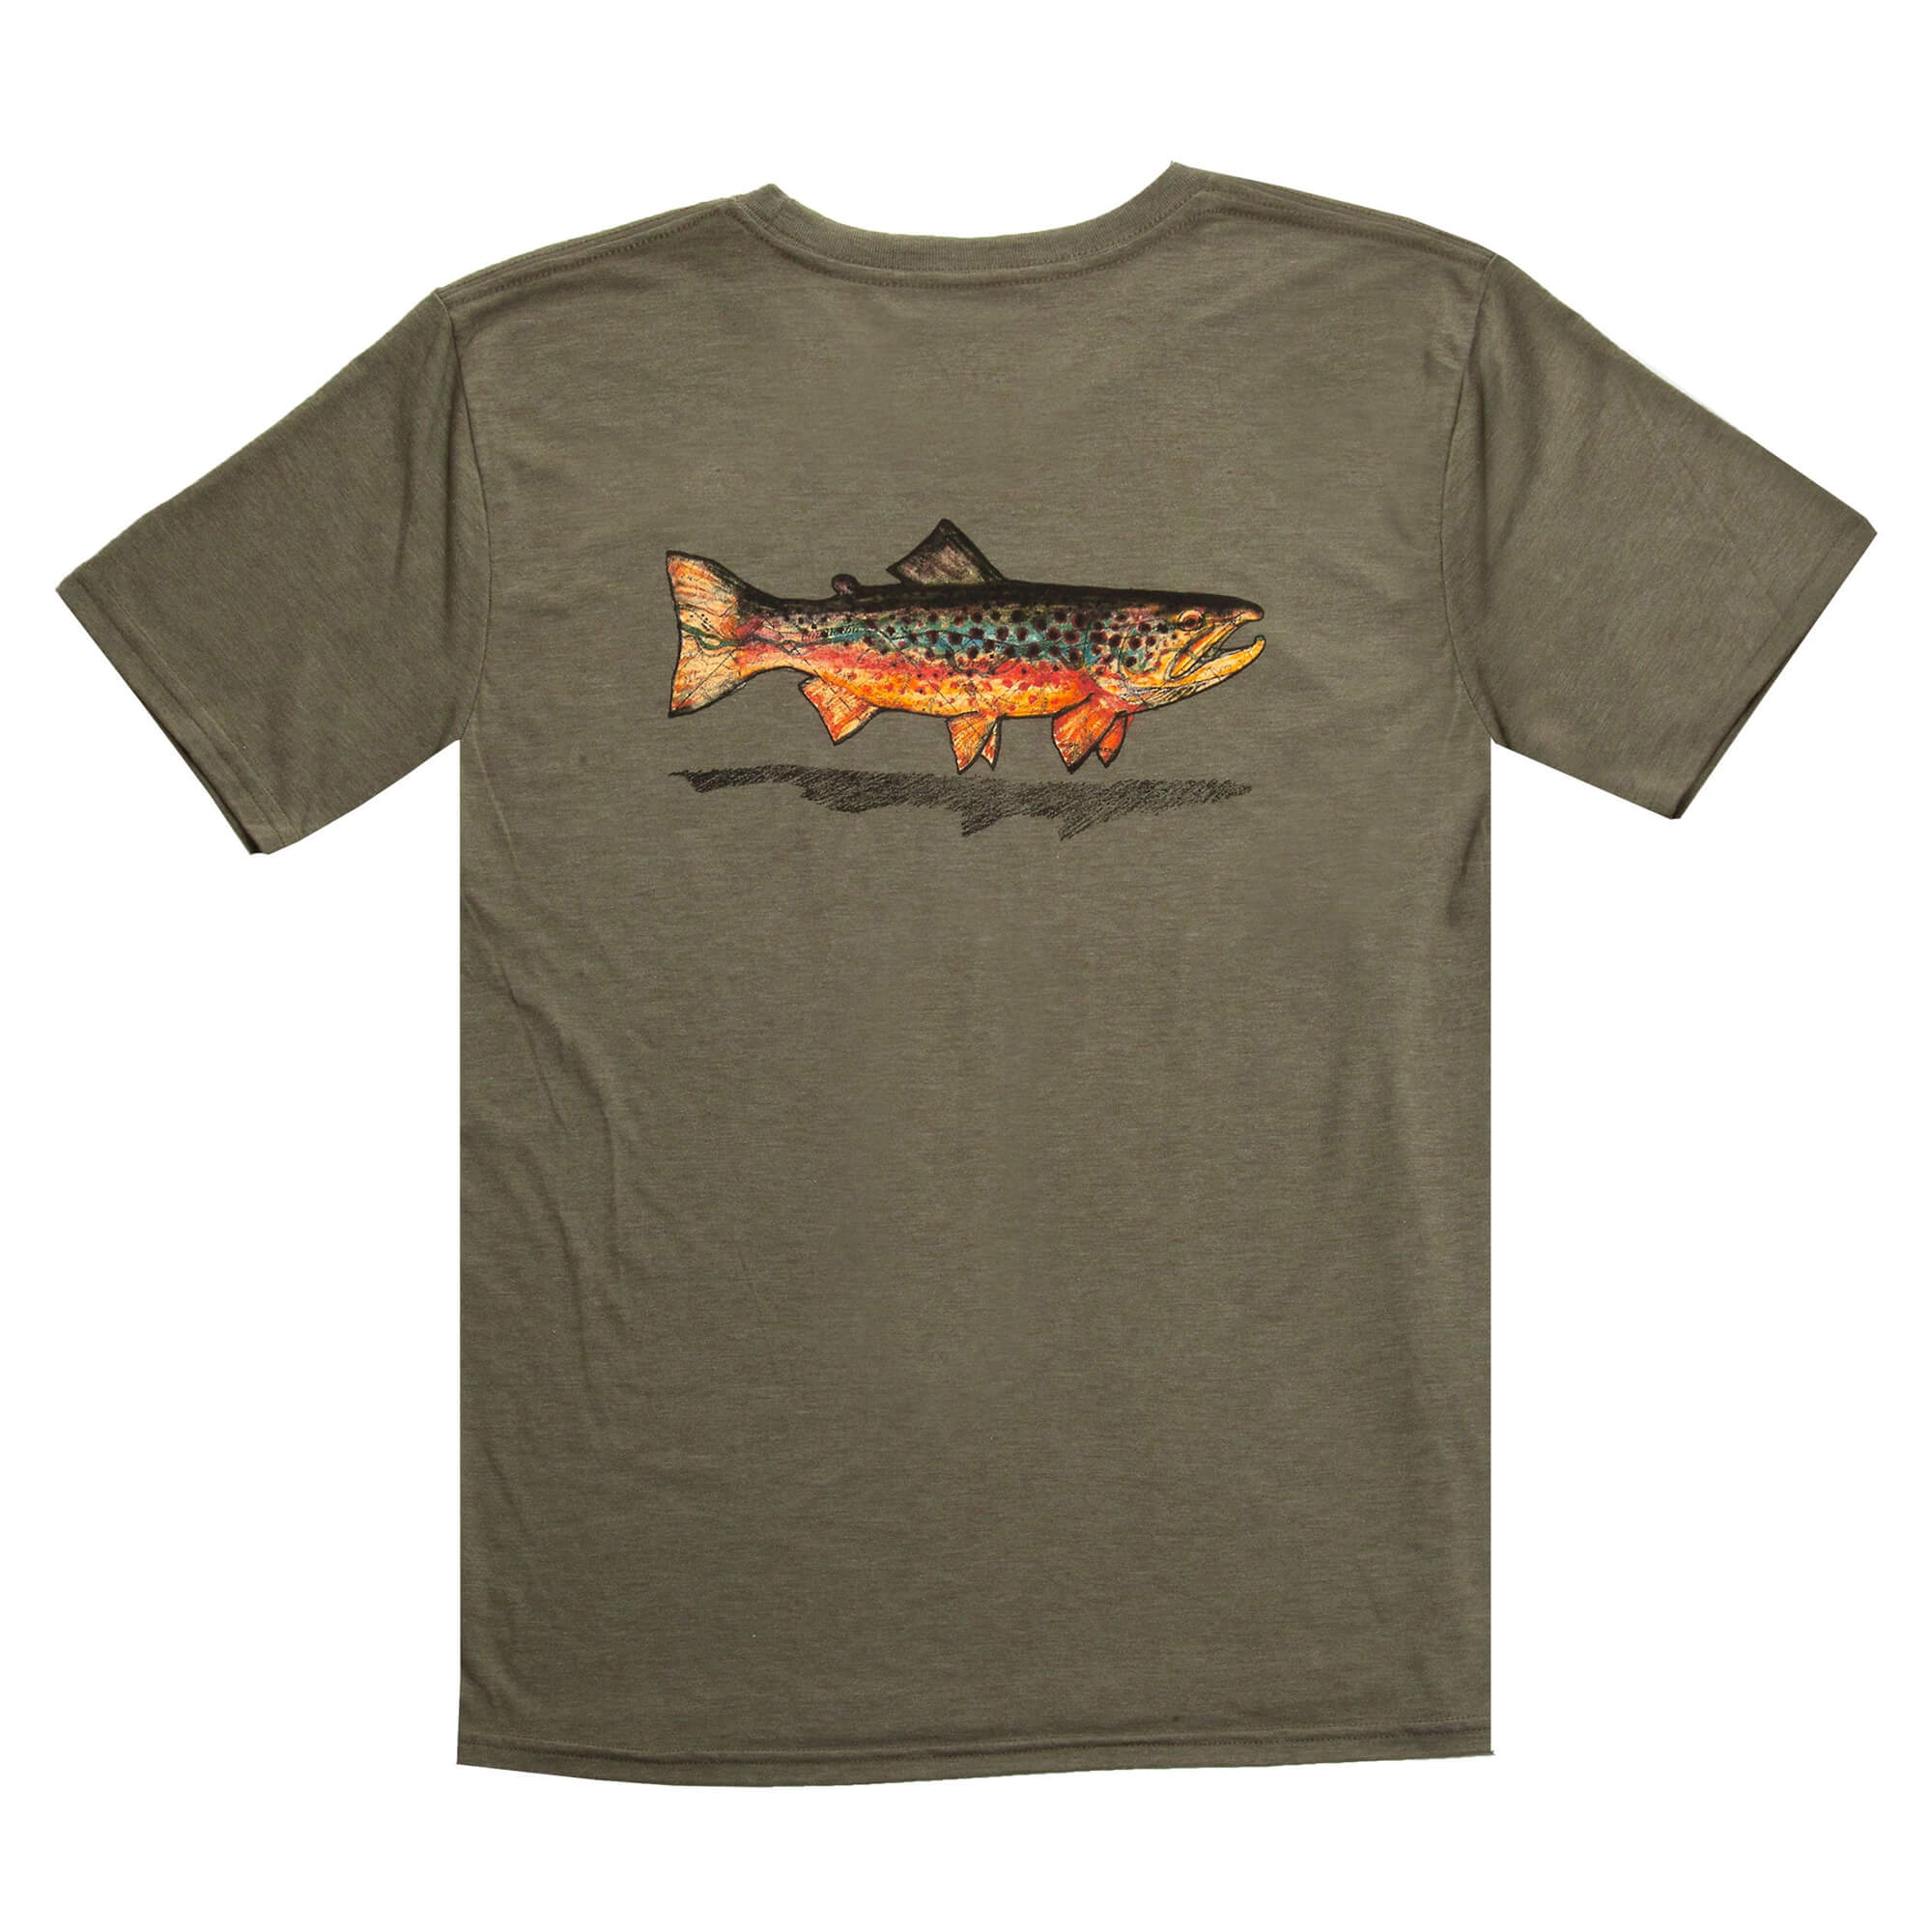 https://www.guideflyfishing.co.uk/wp-content/uploads/2020/10/Fishpond-Local-T-Shirt.jpg